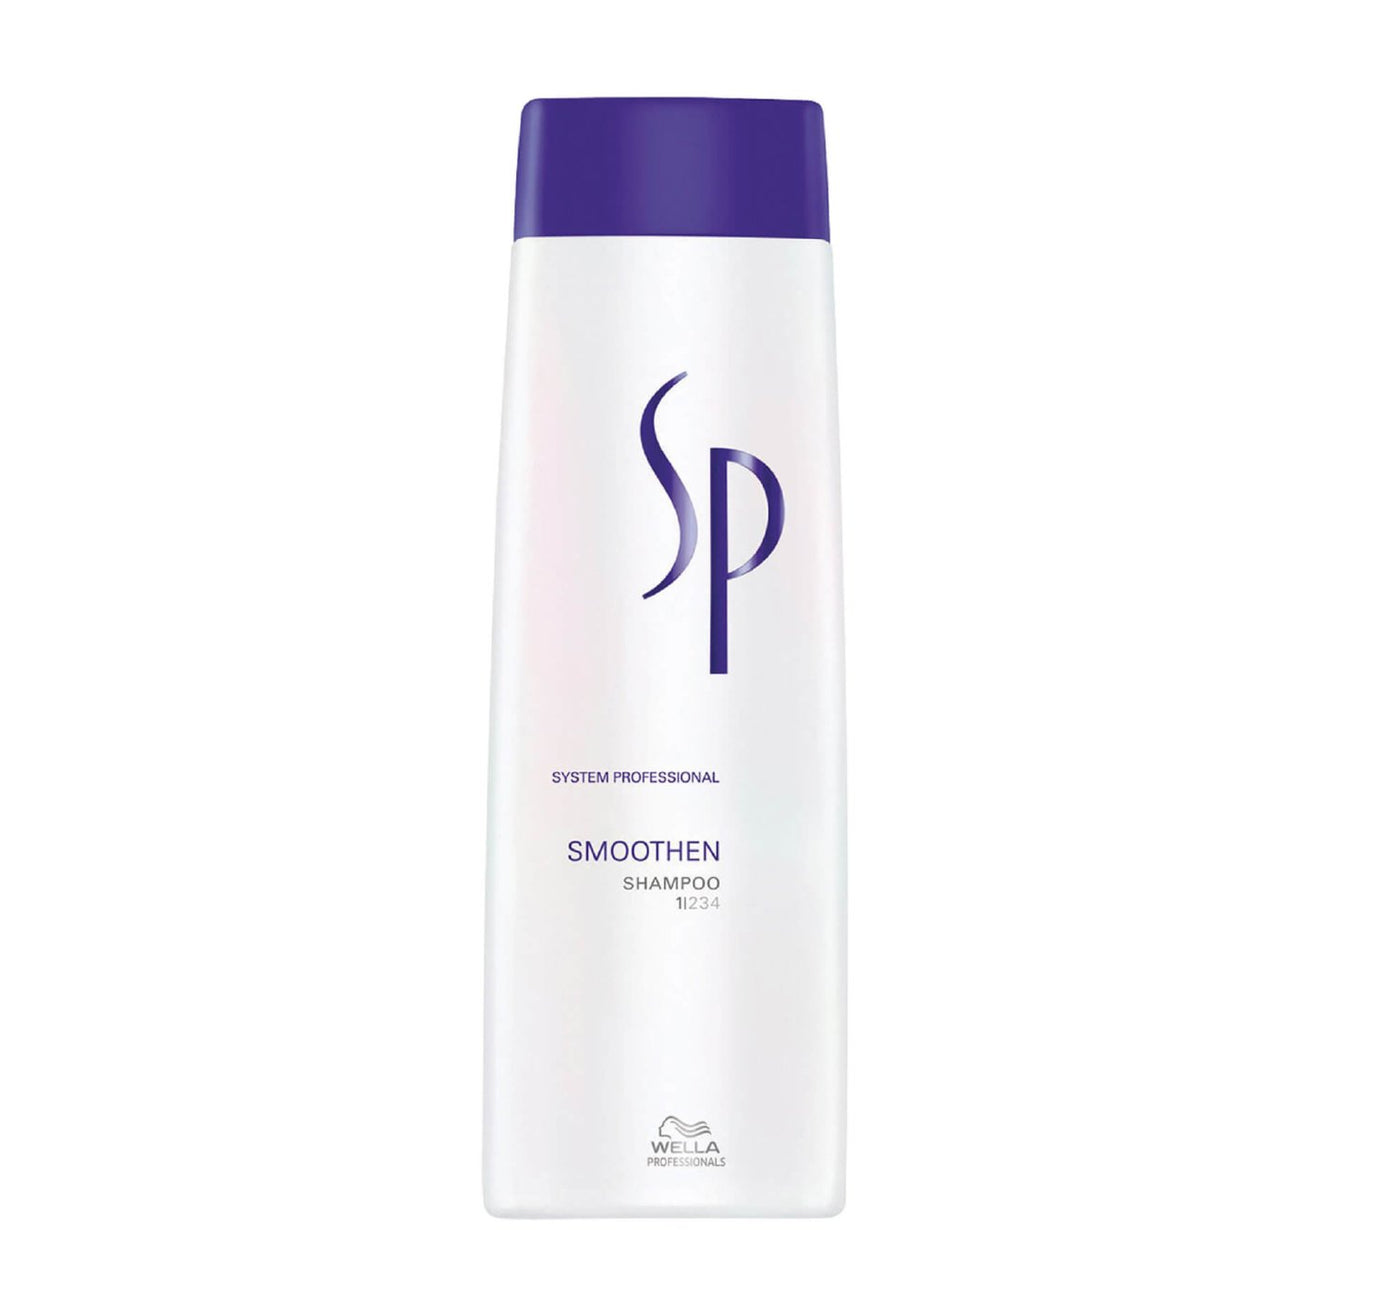 Wella SP Smoothen Shampoo 250ml - Salon Warehouse